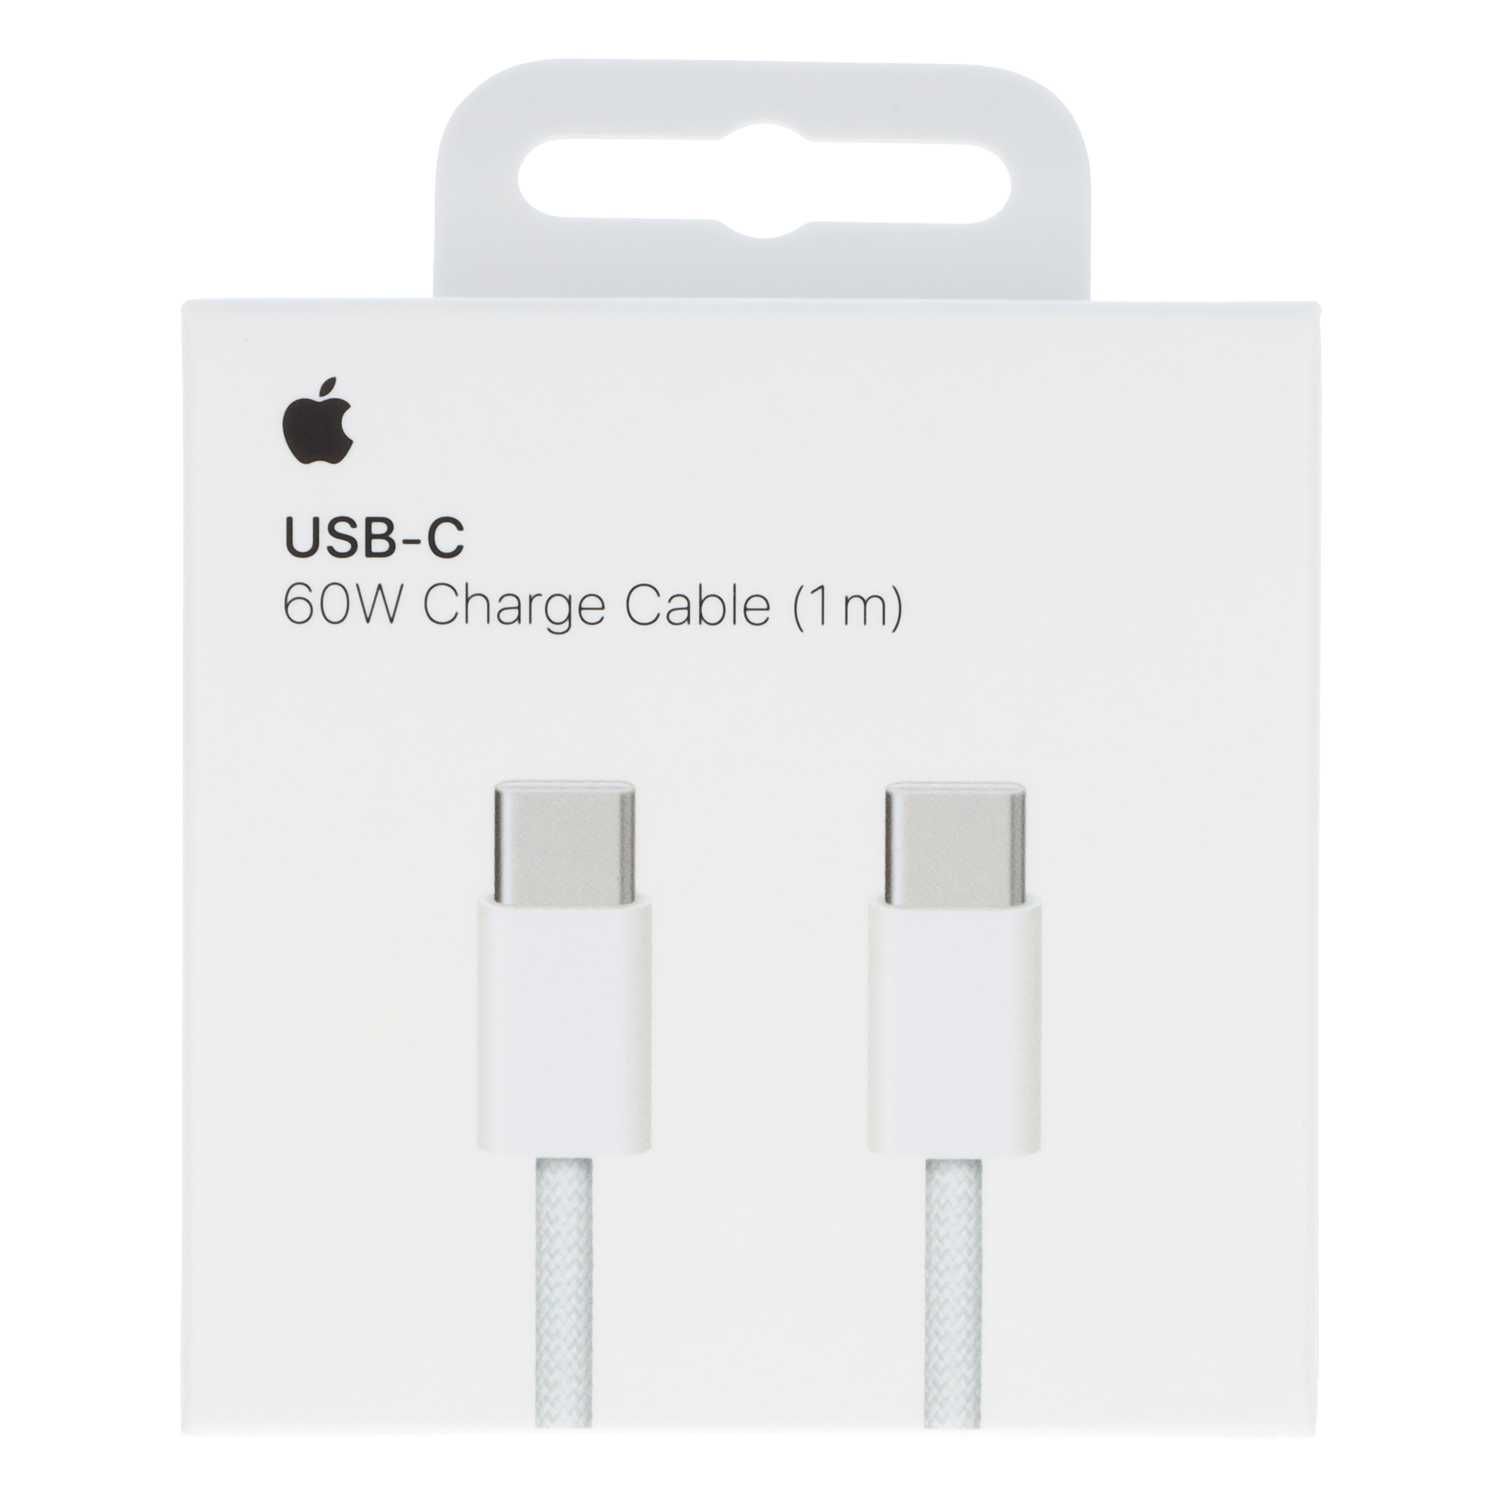 Cablu Apple USB-C to USB-C 1m